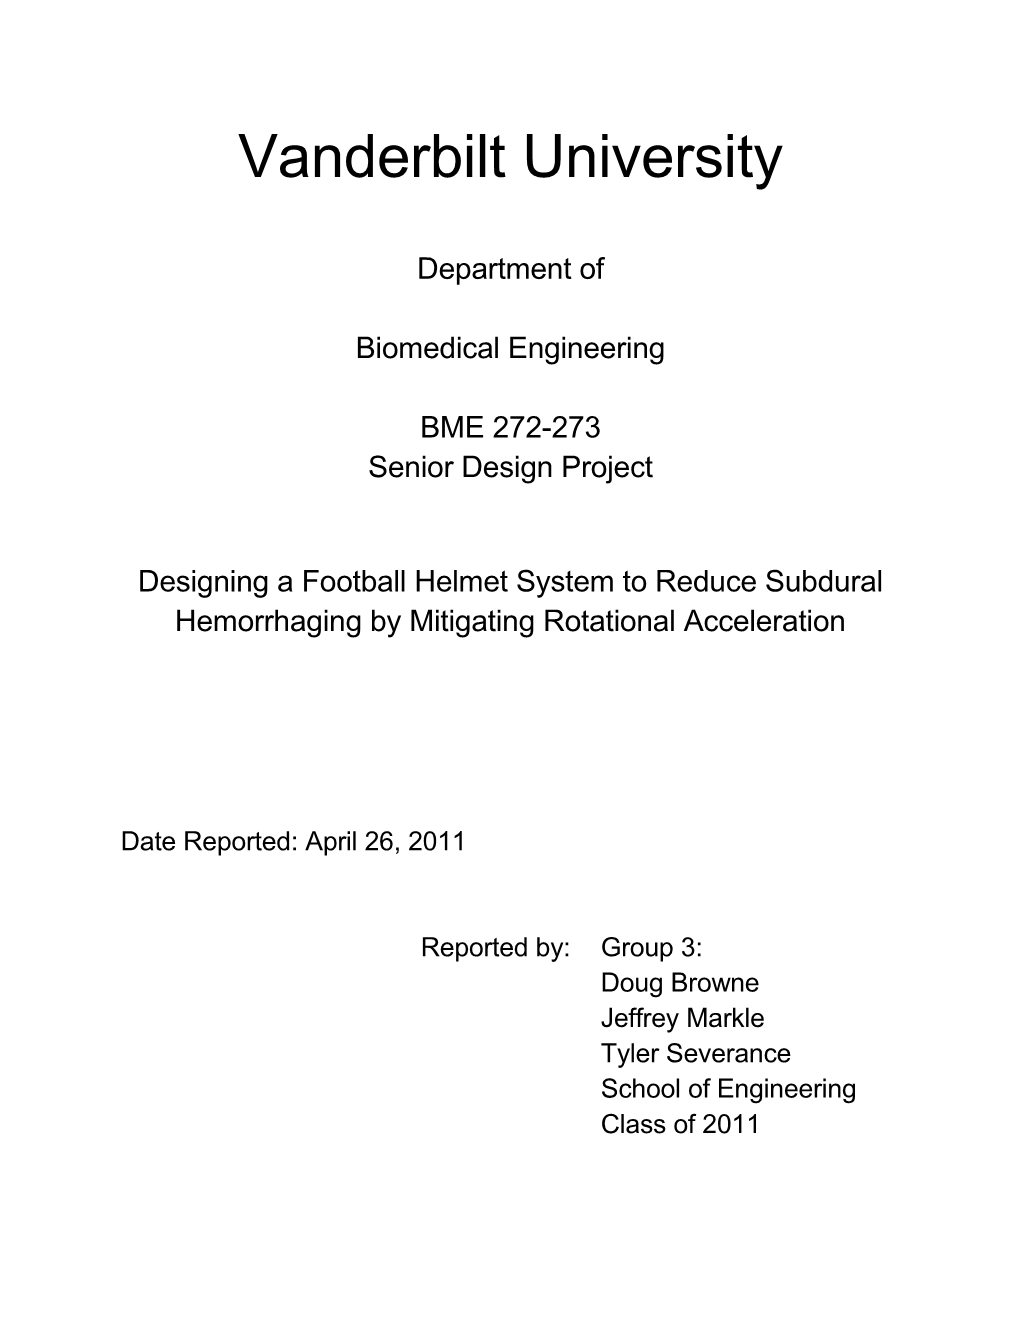 Vanderbilt University s1